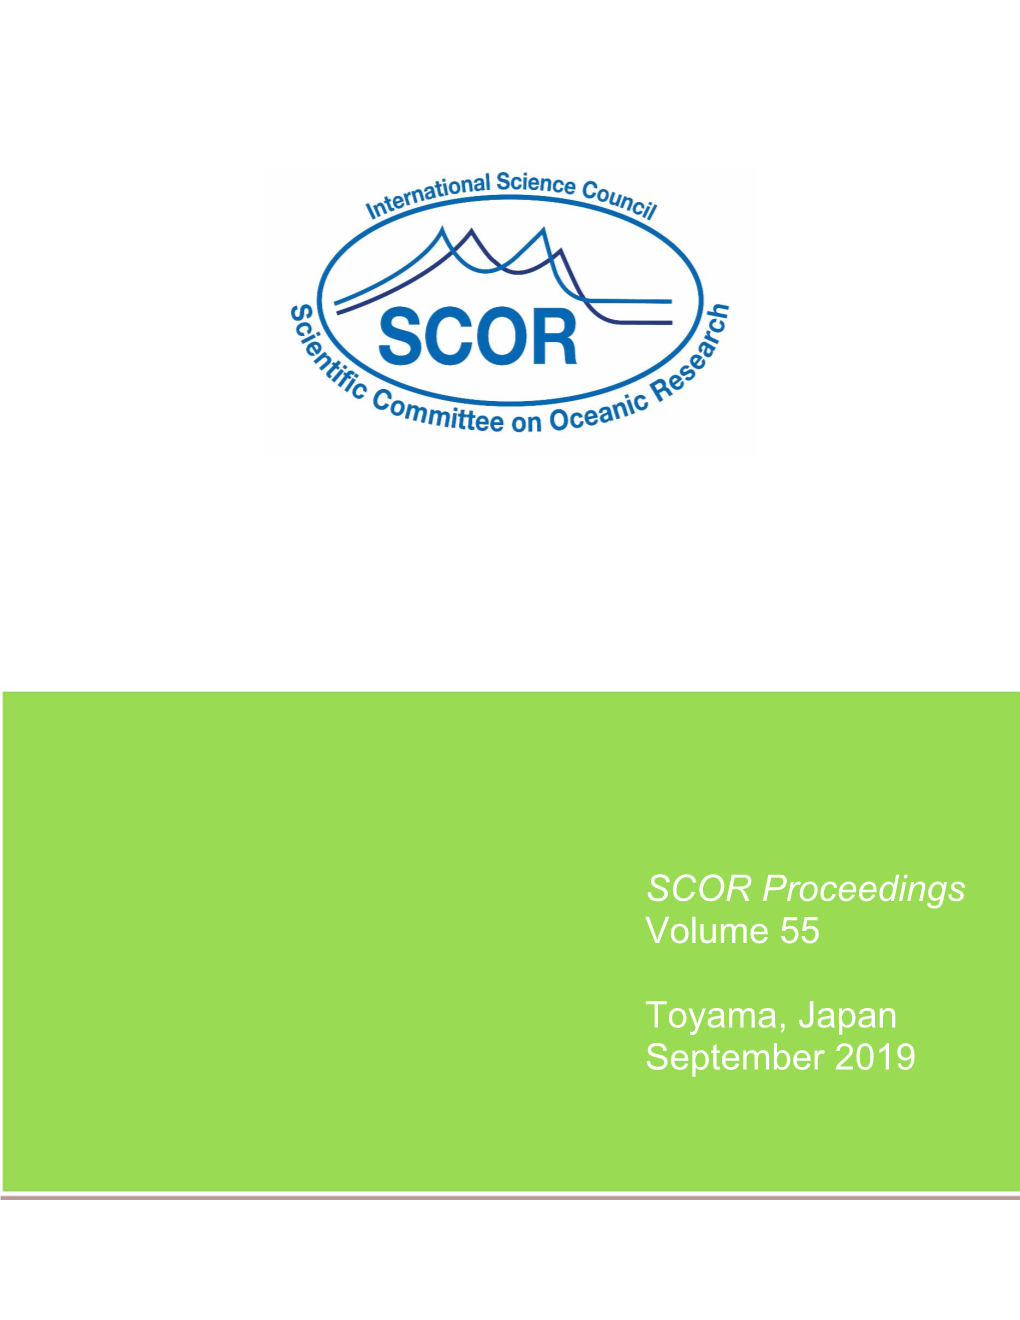 SCOR Proceedings Volume 55 Toyama, Japan September 2019